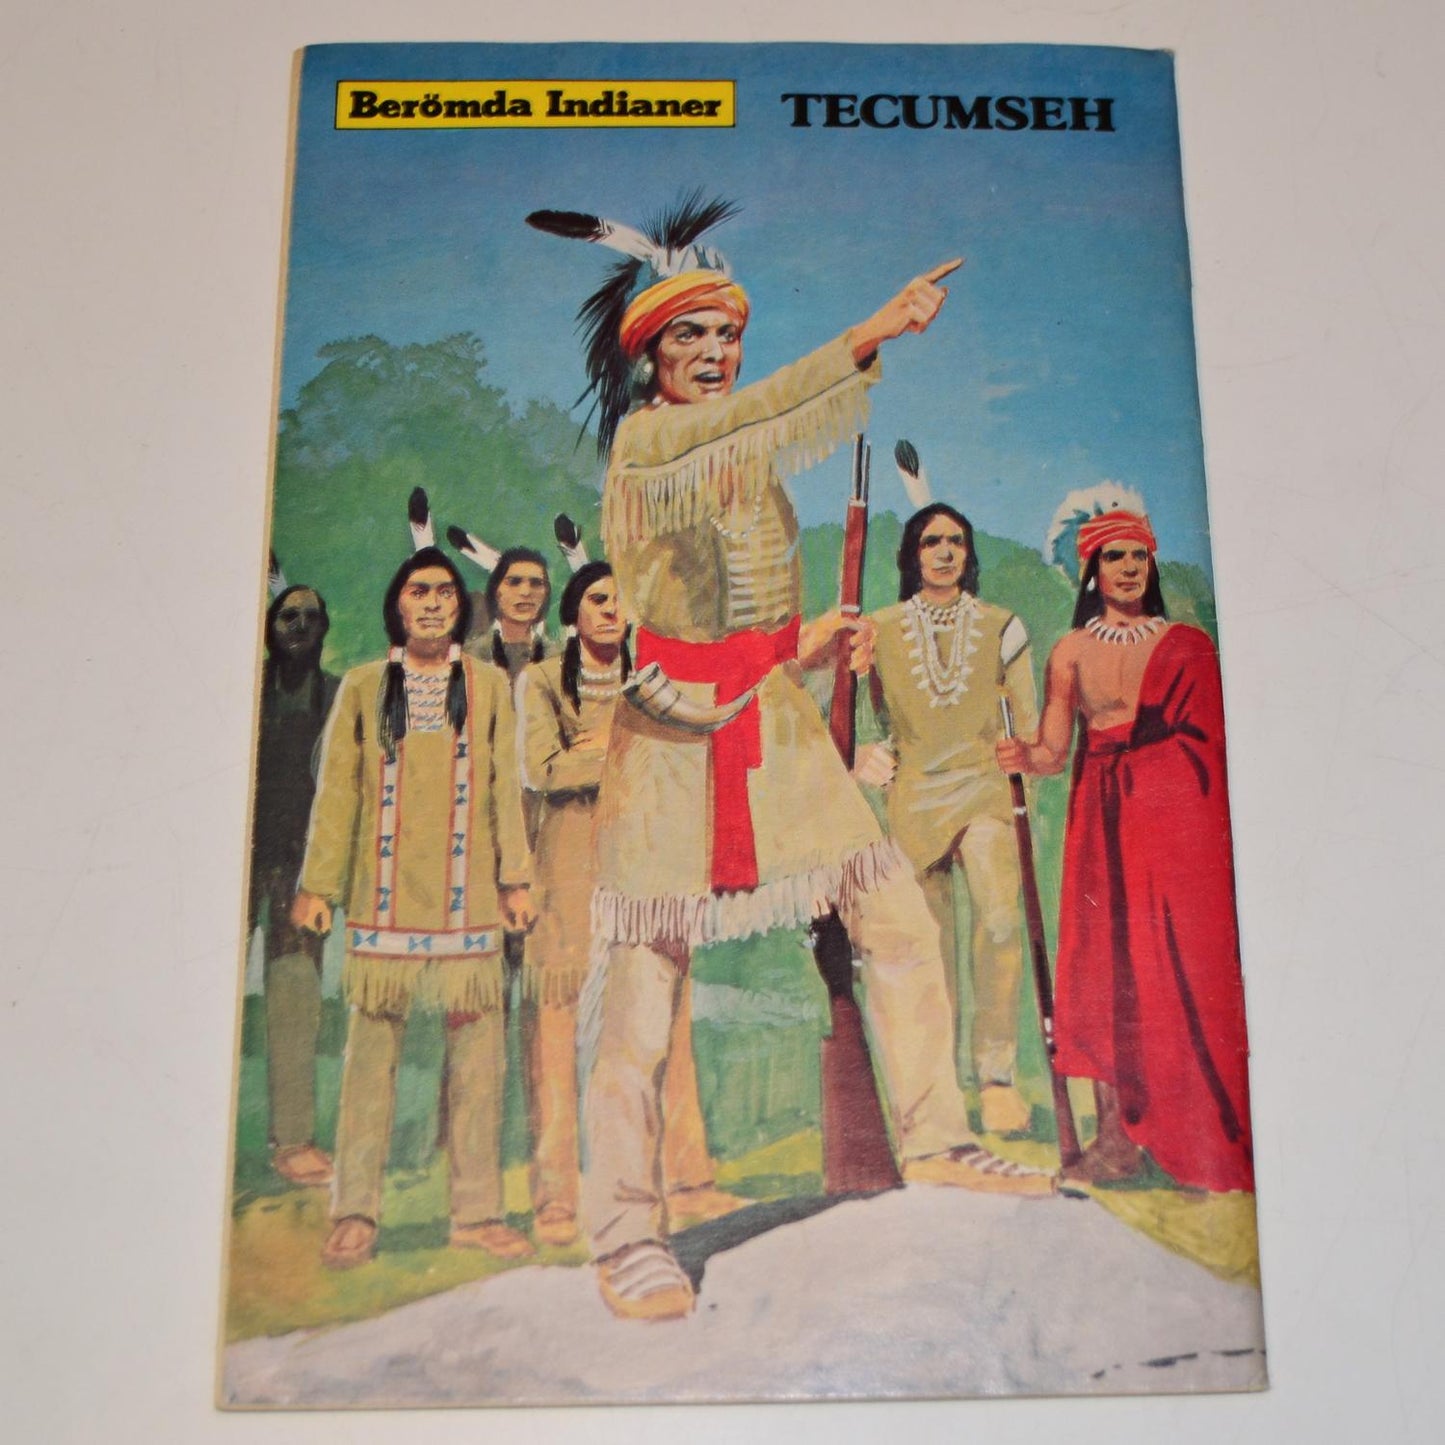 Tomahawk Nr 7 1979 #FN#